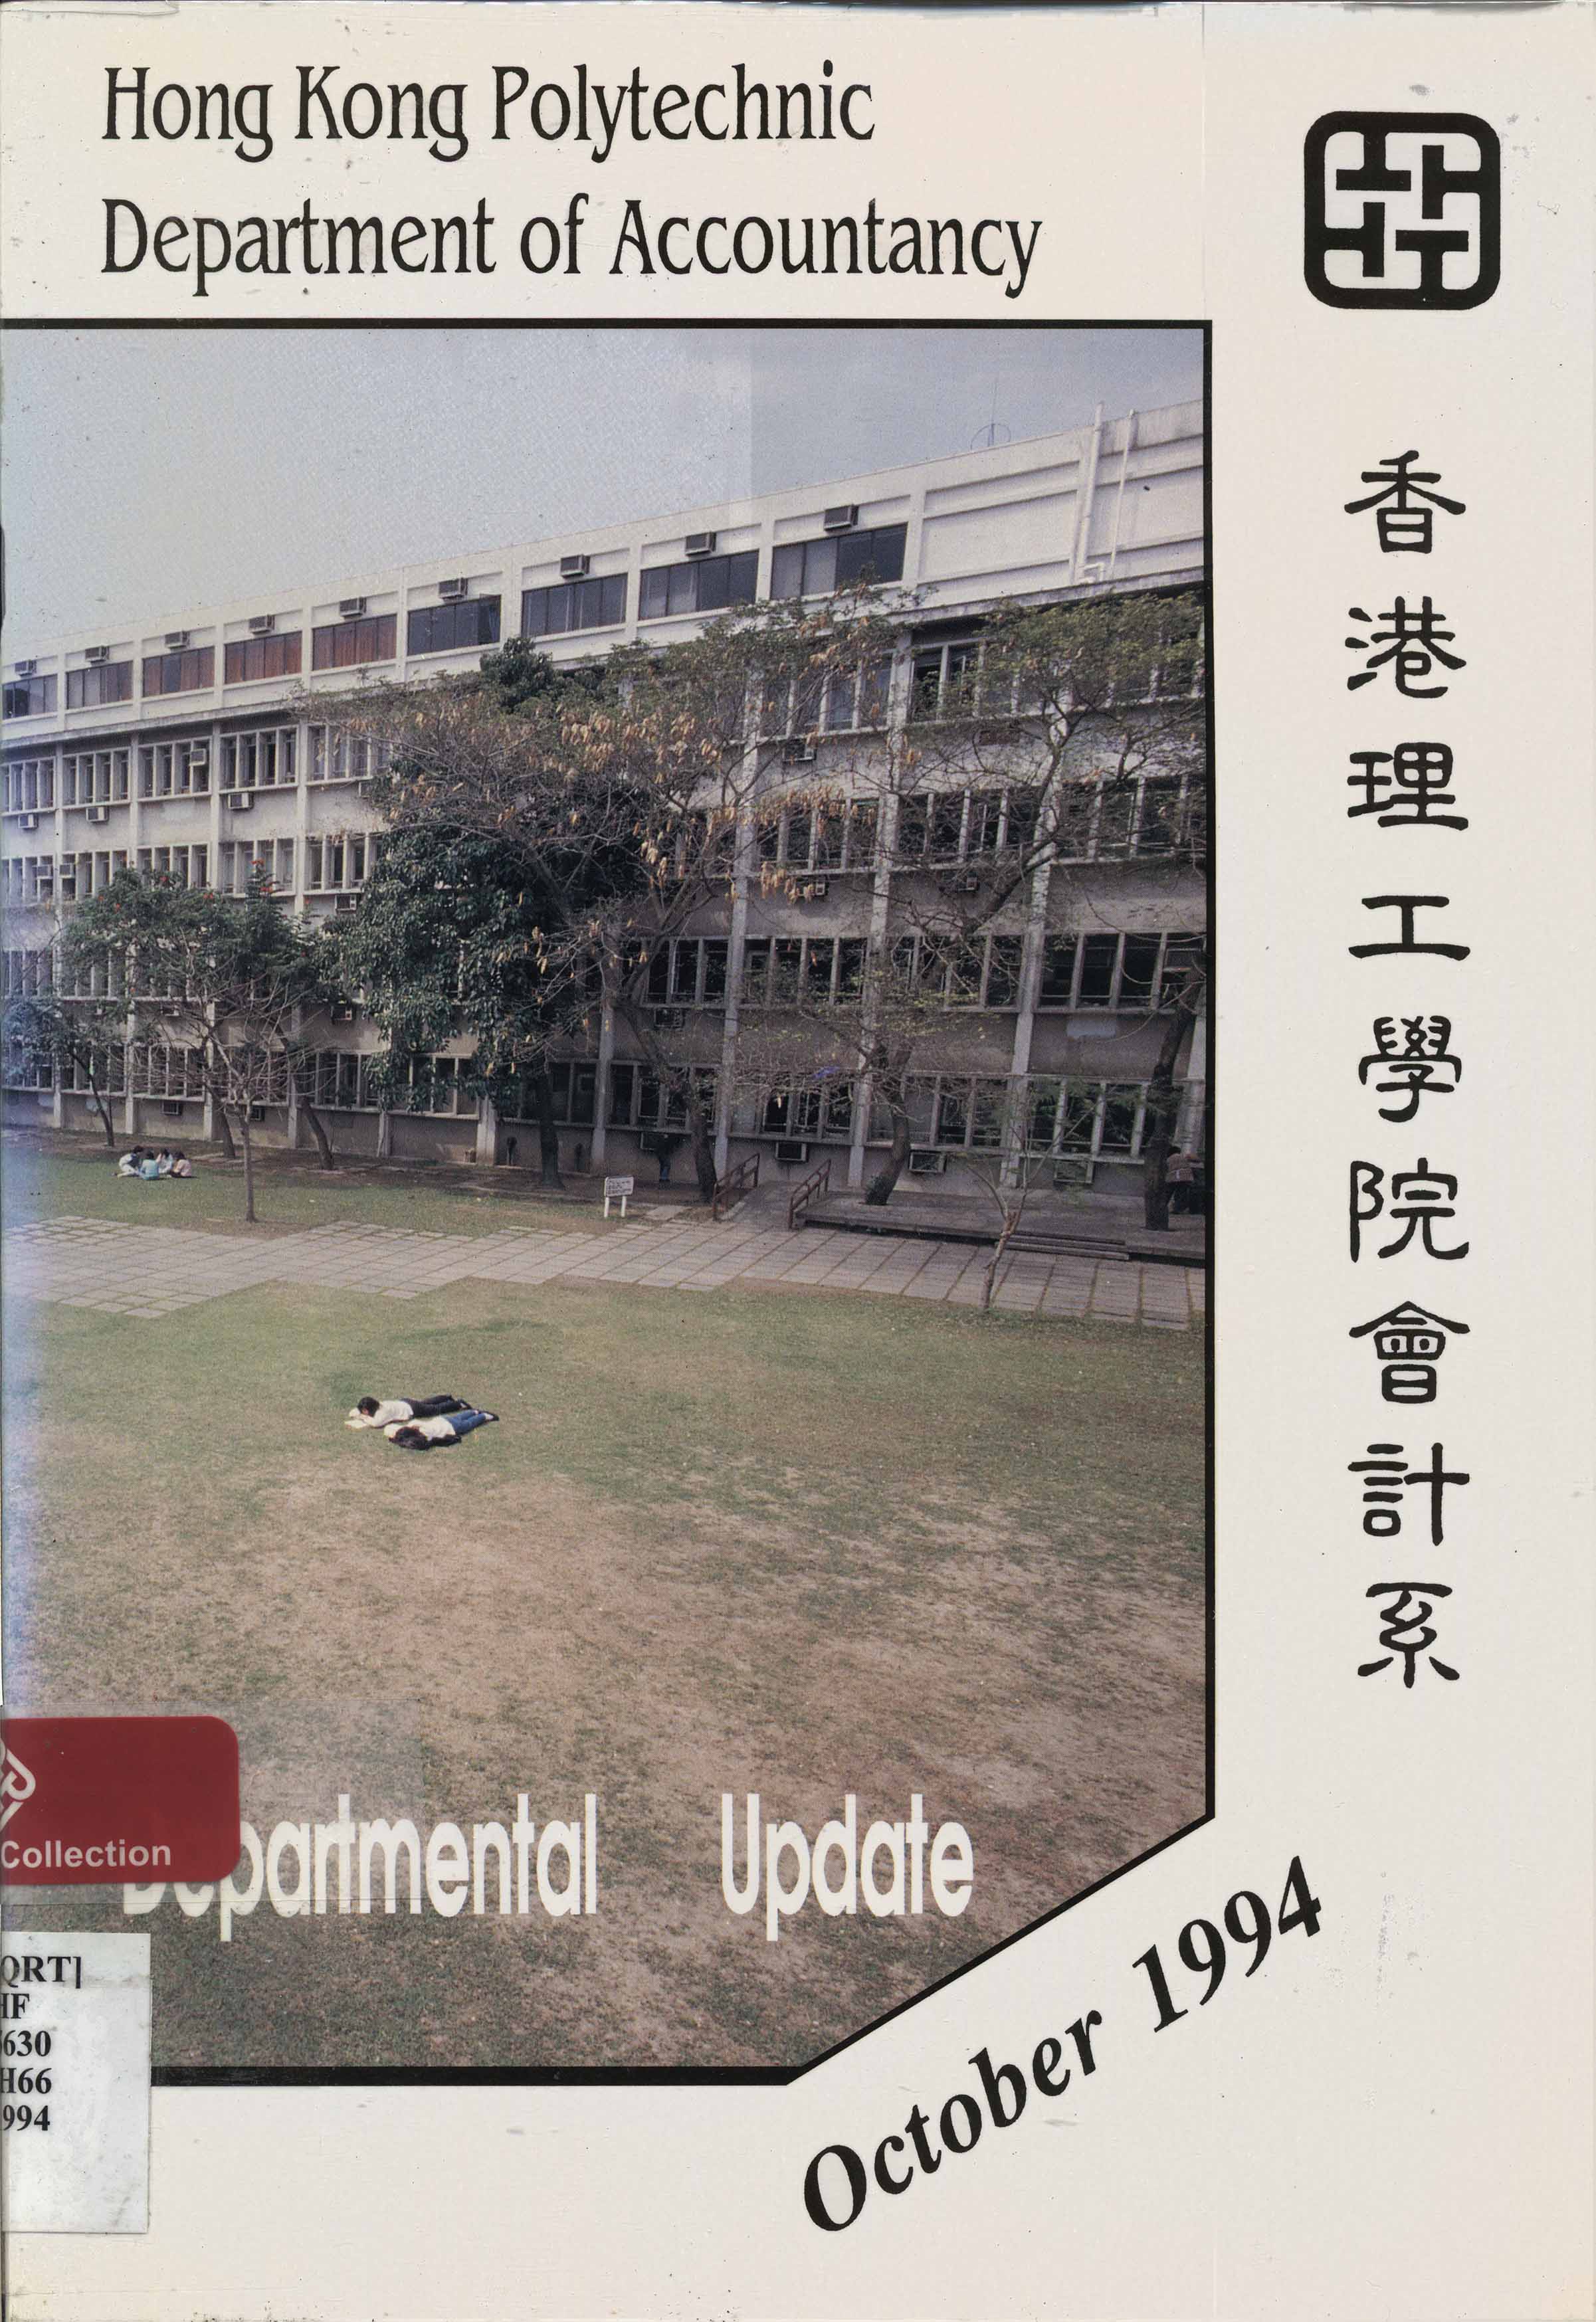 Hong Kong Polytechnic. Department of Accountancy. Departmental update 1994